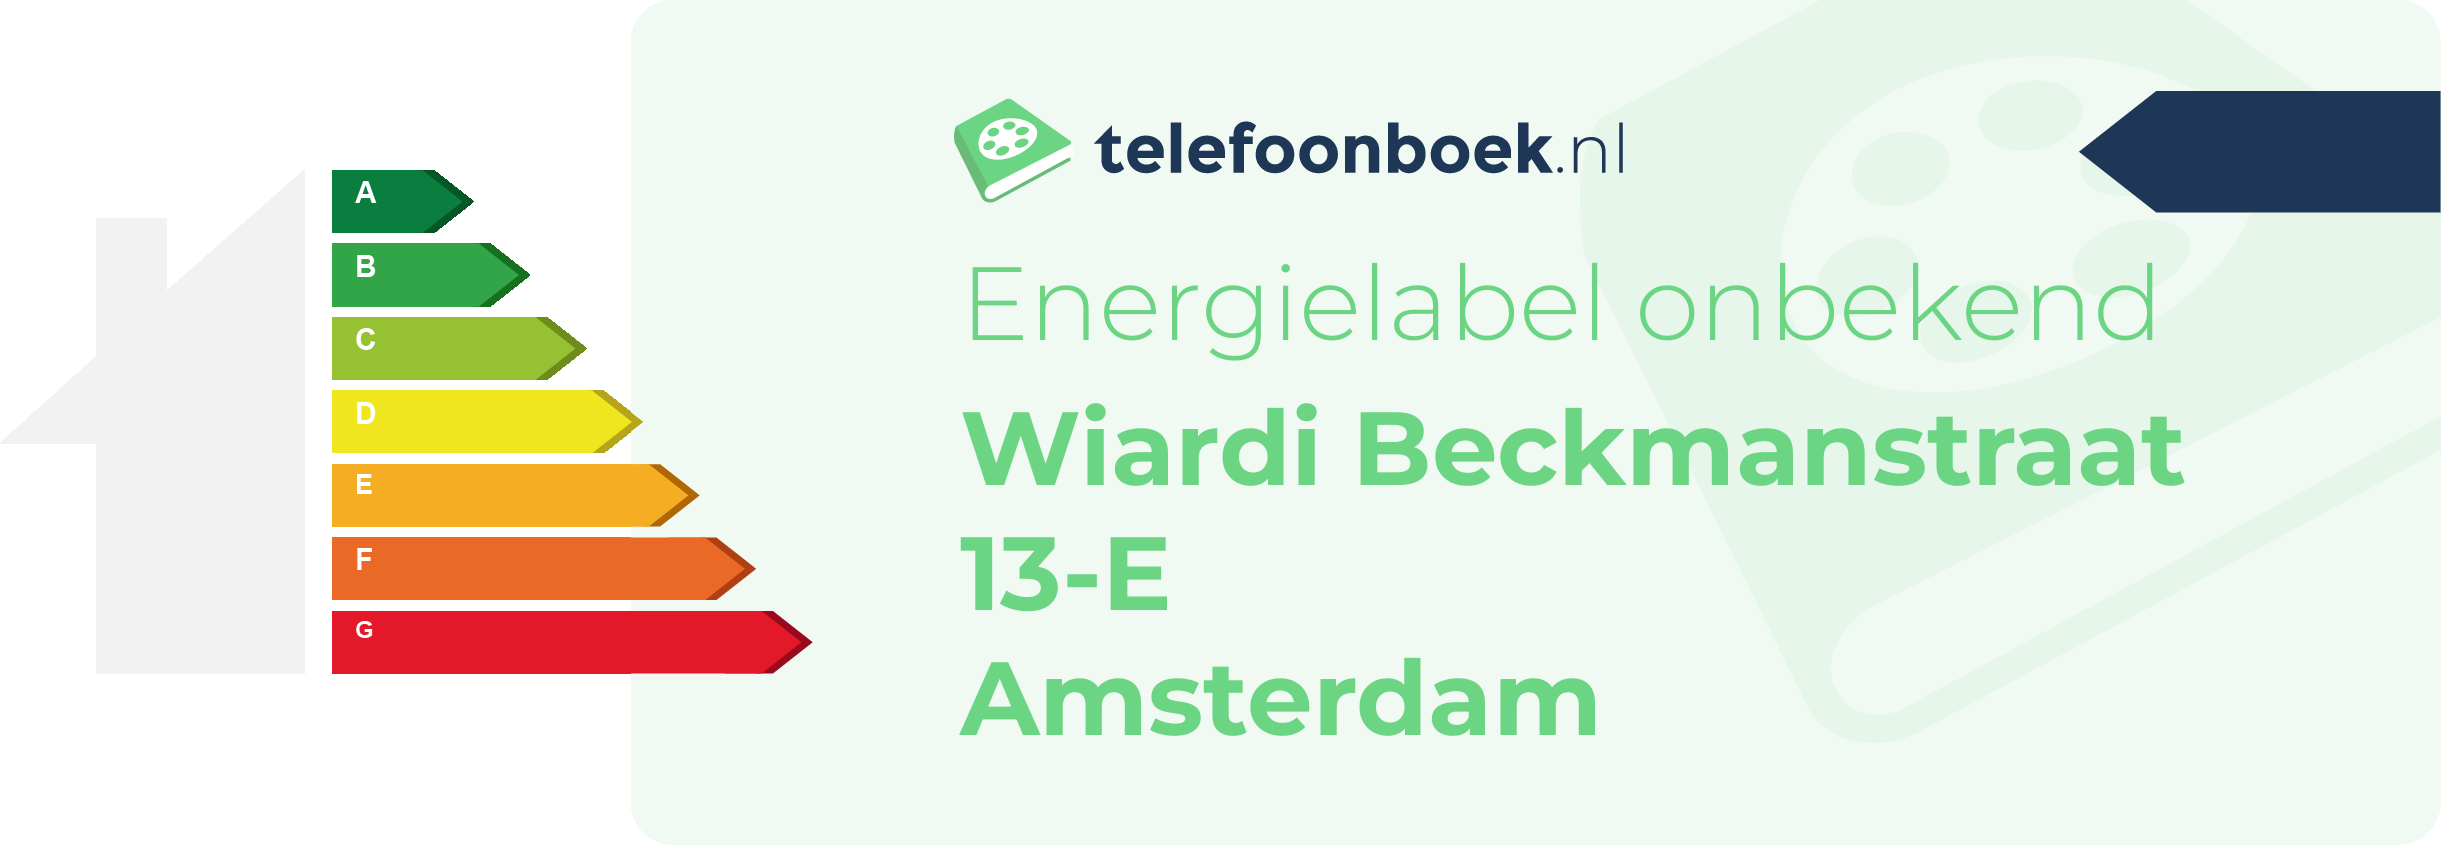 Energielabel Wiardi Beckmanstraat 13-E Amsterdam